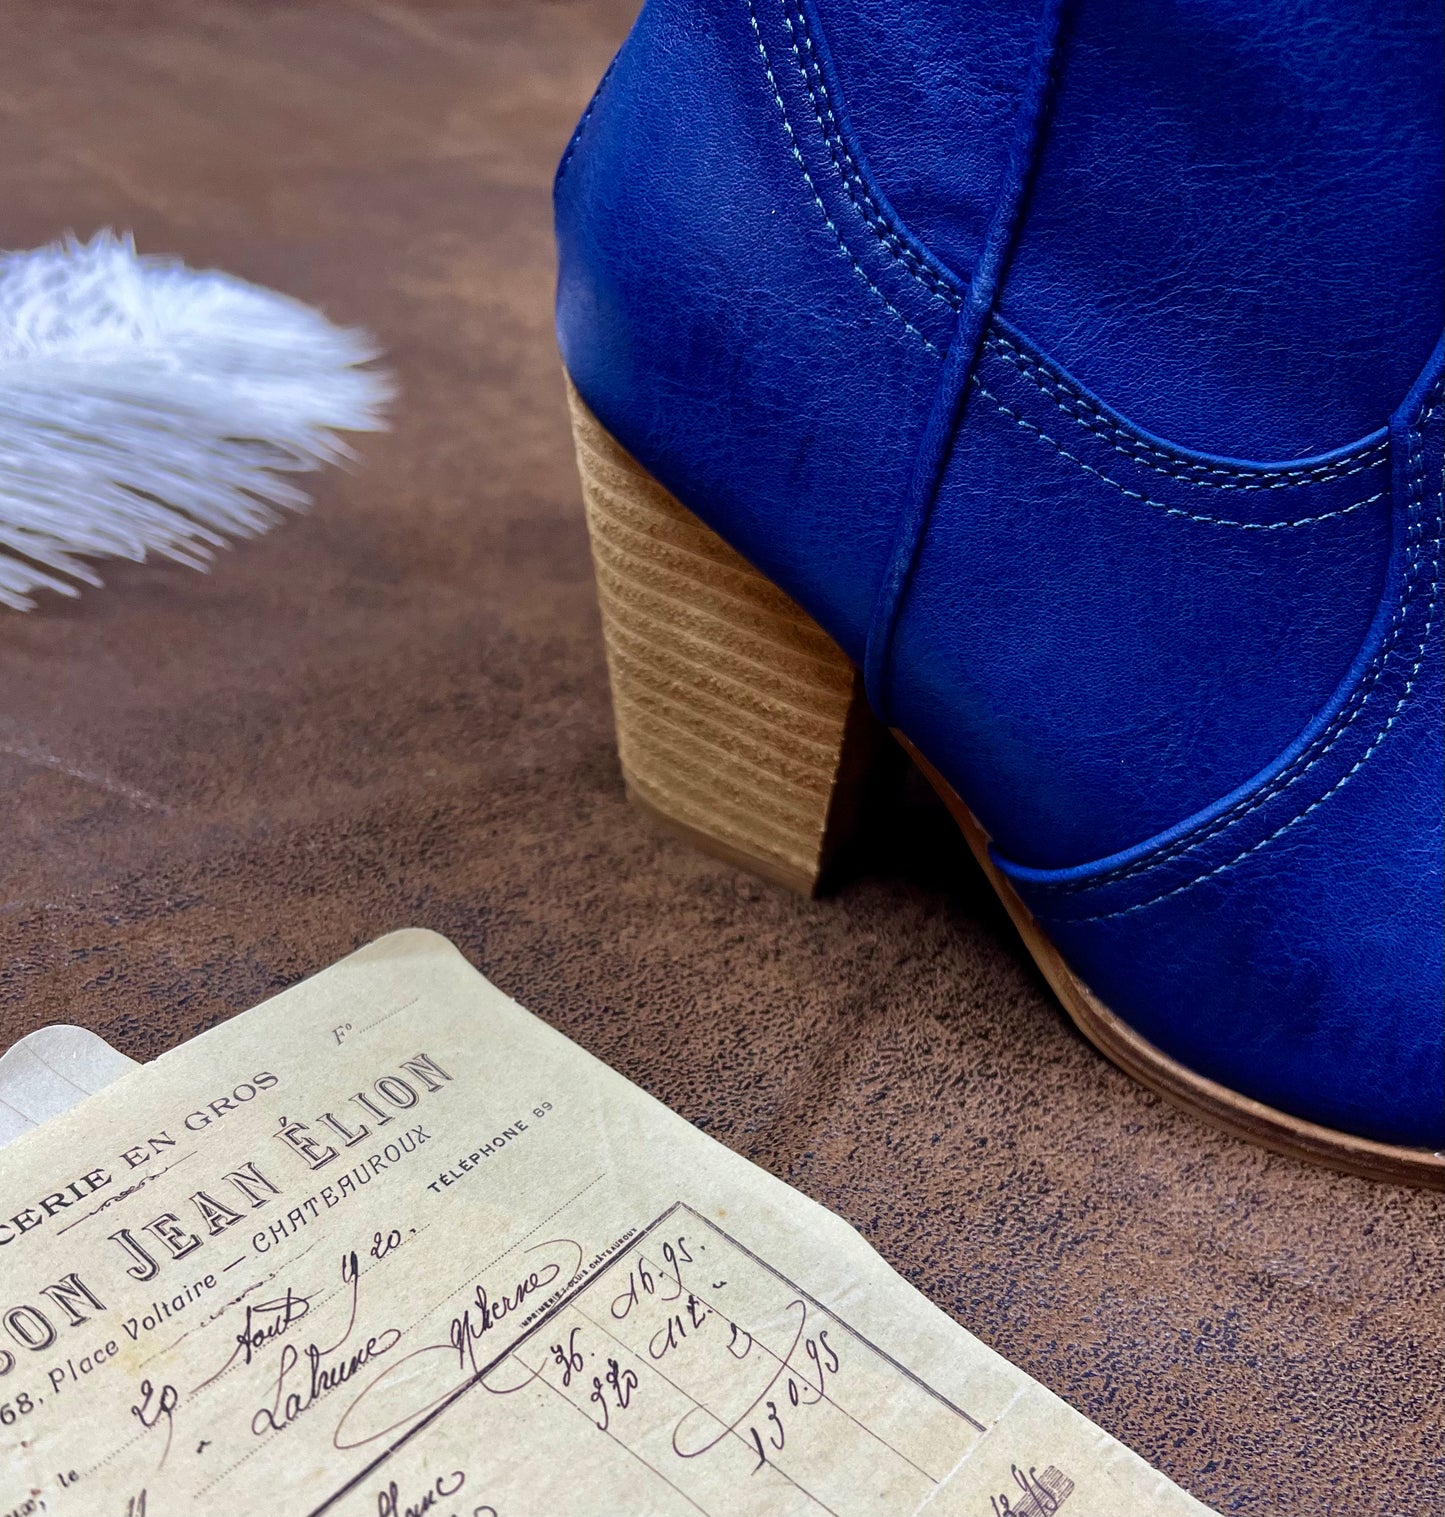 Blue Metallic Silver Toe Tip Mid-Calf
Western Boots